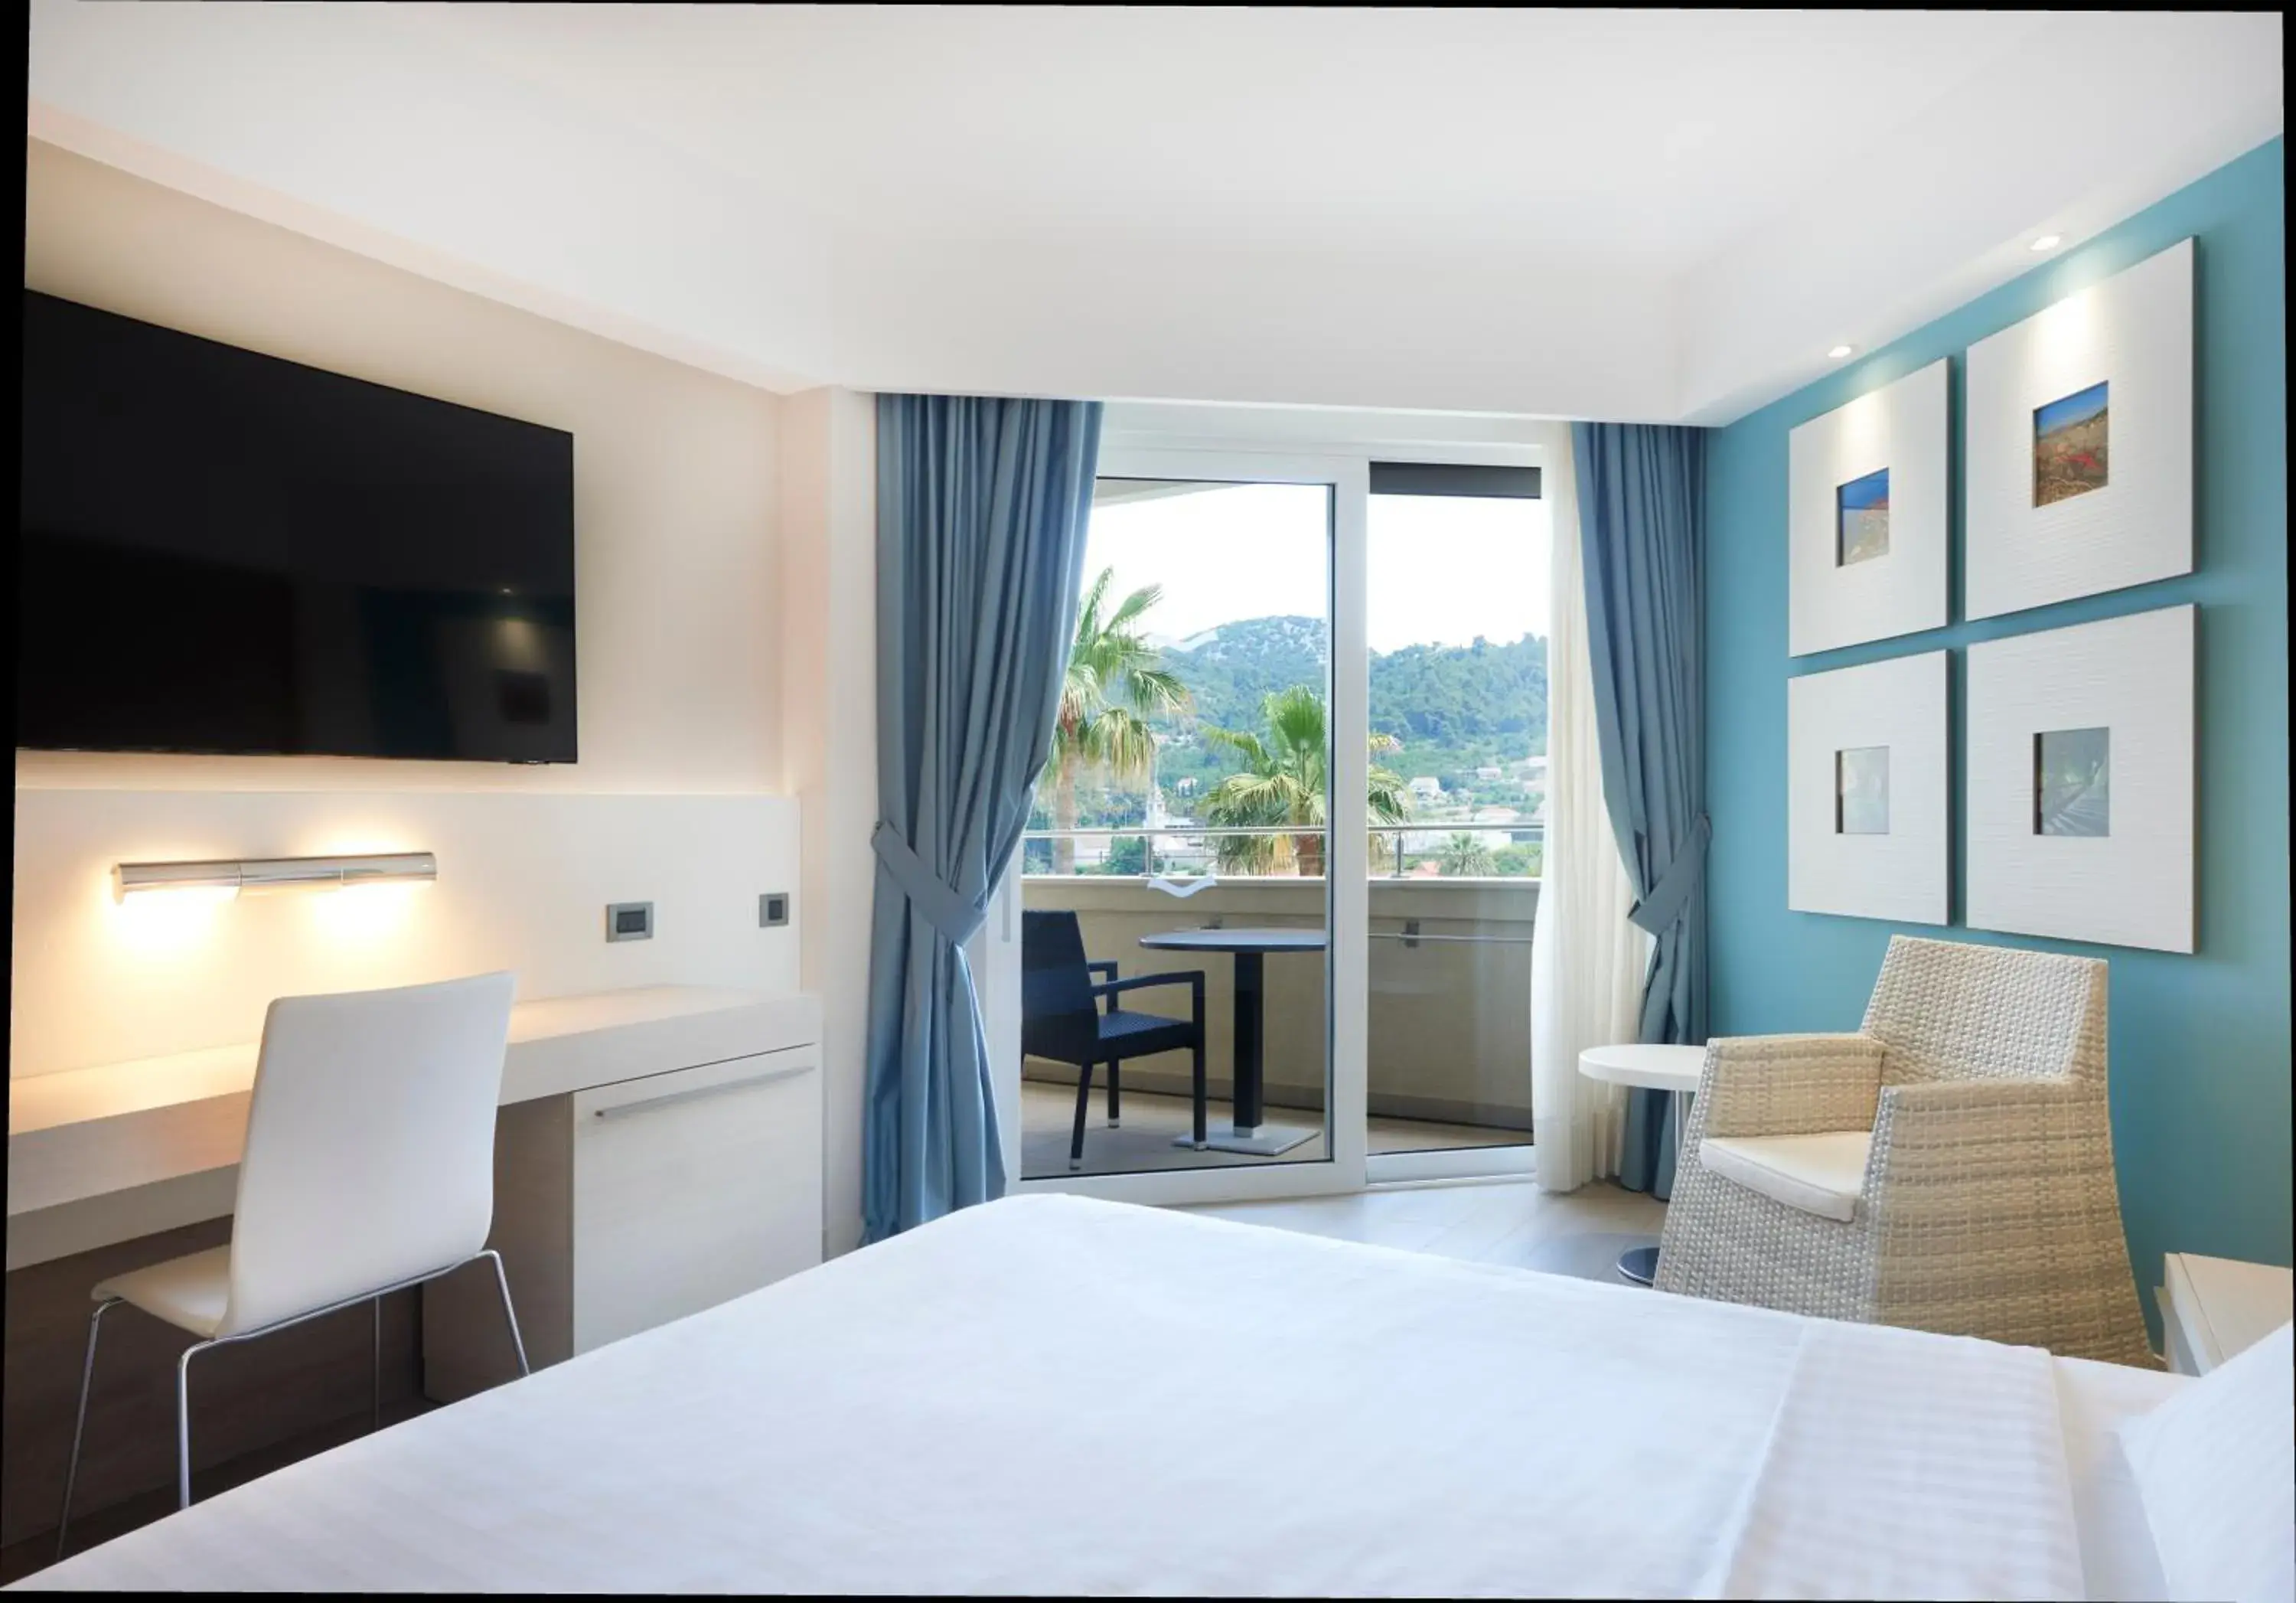 Bed in Lafodia Sea Resort